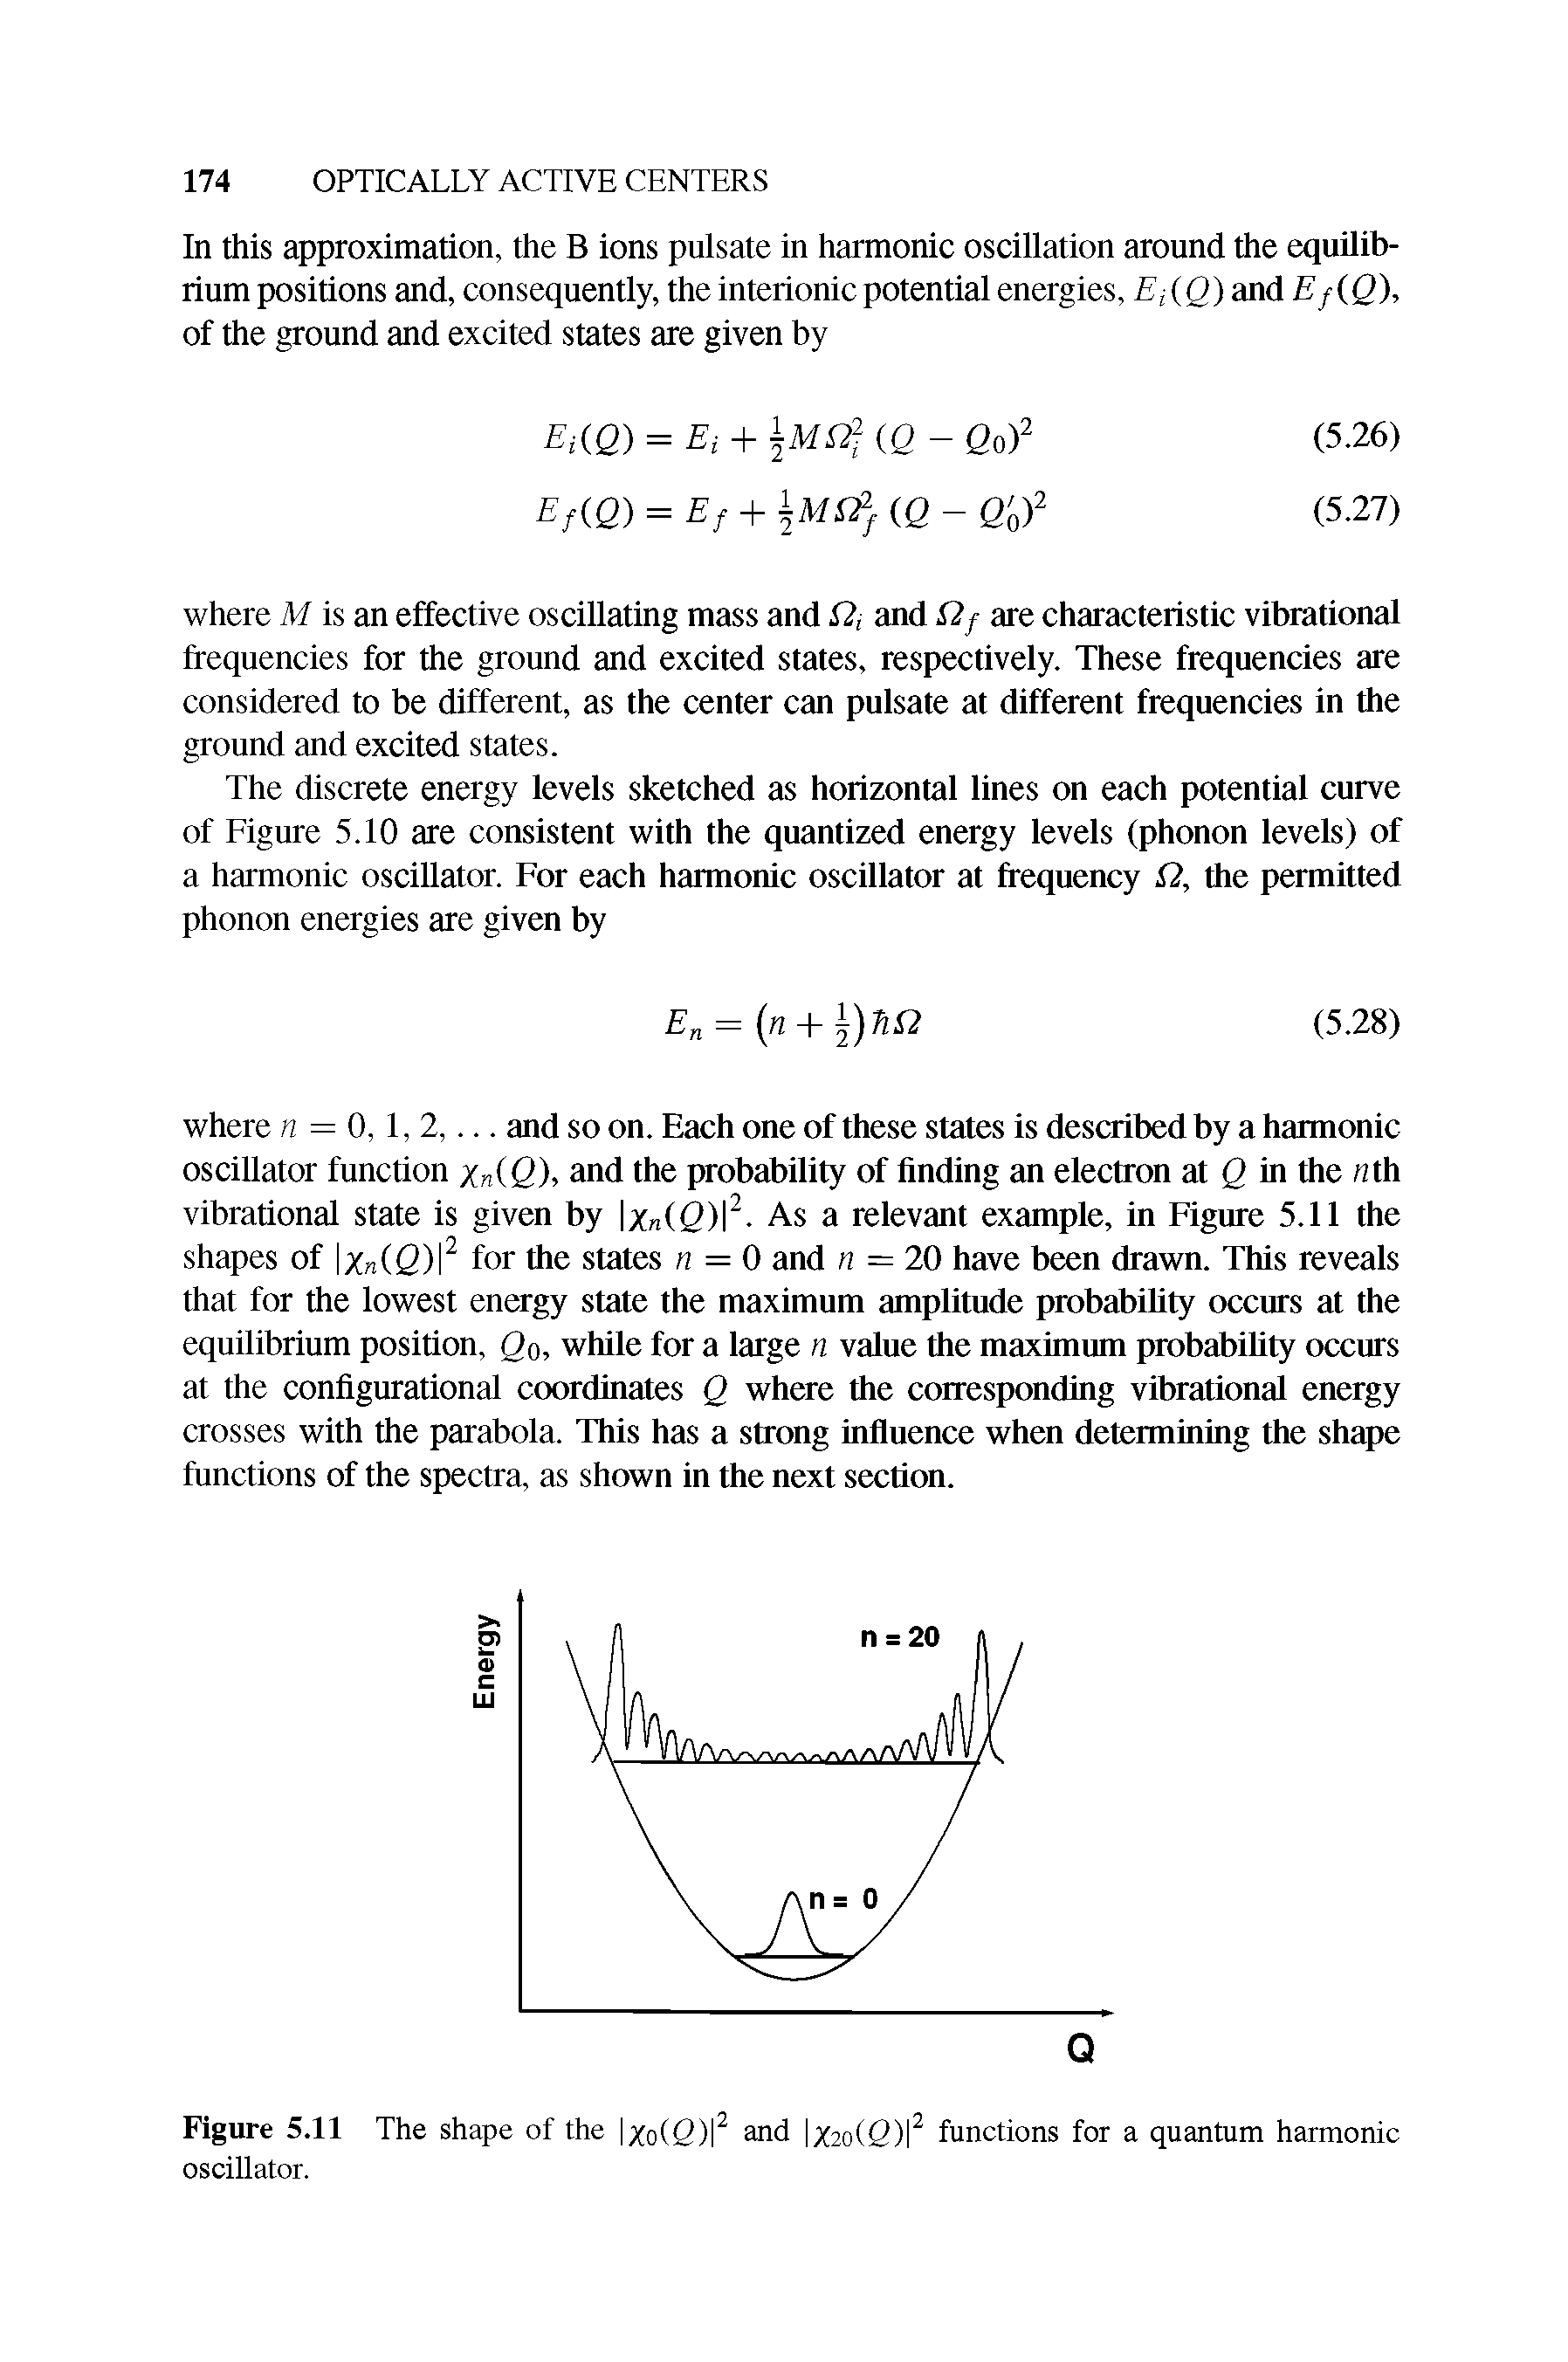 Figure 5.11 The shape of the lxo(2)l and x2o(Q) functions for a quantum harmonic oscillator.